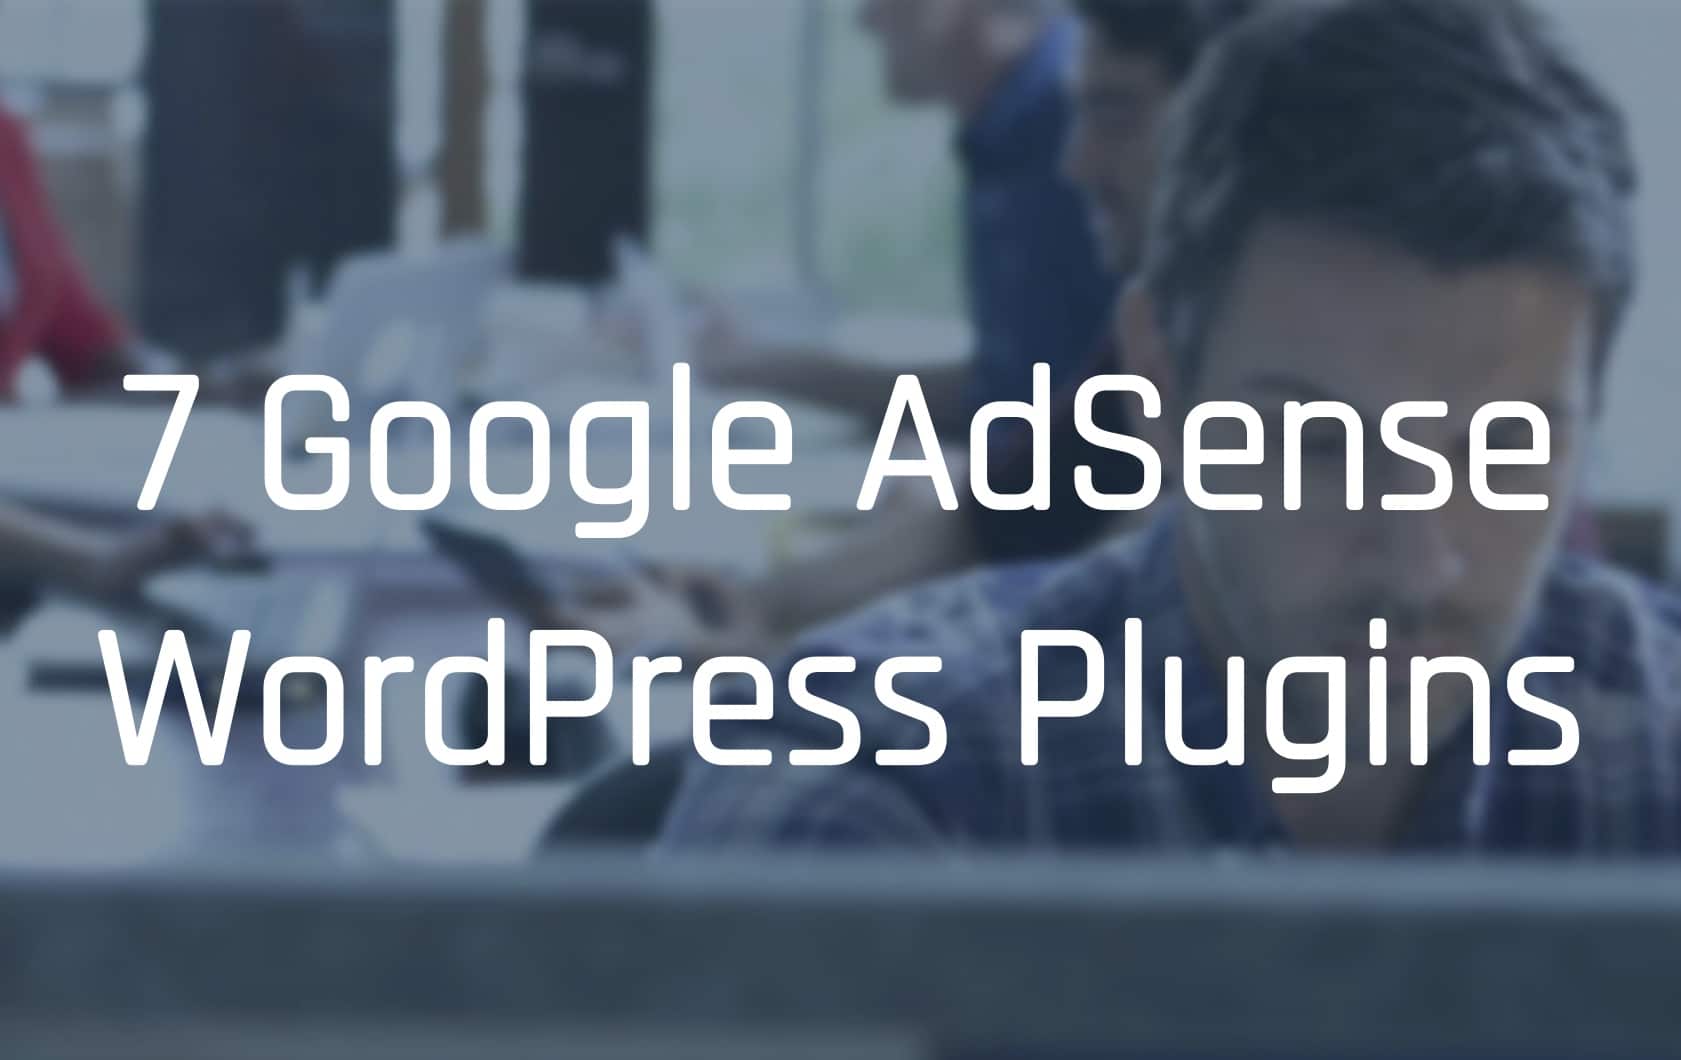 Google AdSense WordPress